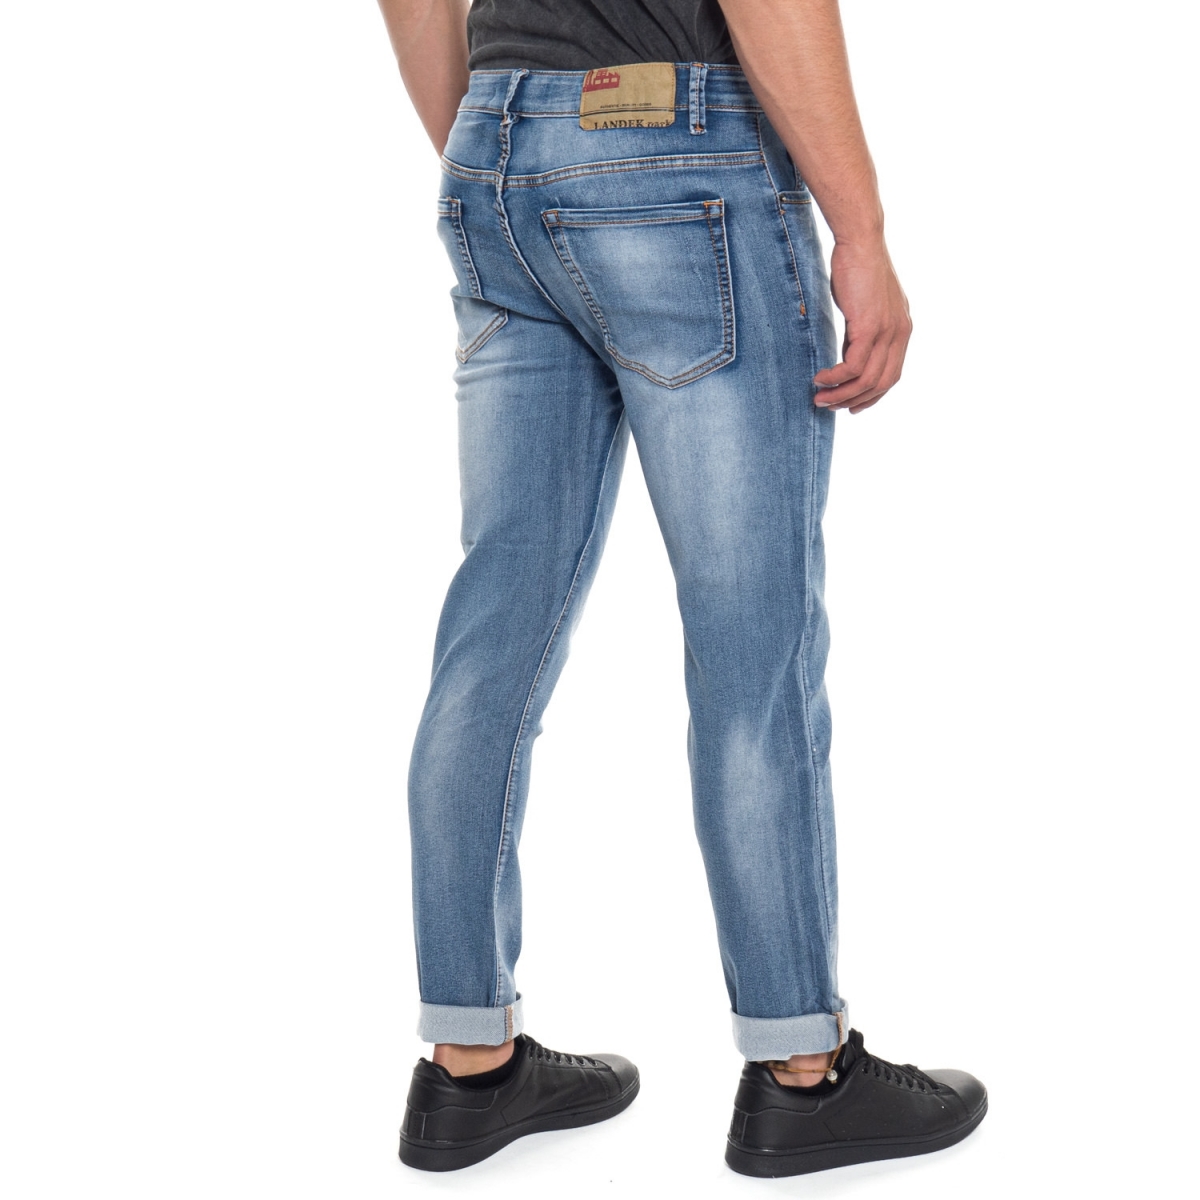 Kleidung Jeans mann Jeans LPHM1095 LANDEK PARK Cafedelmar Shop